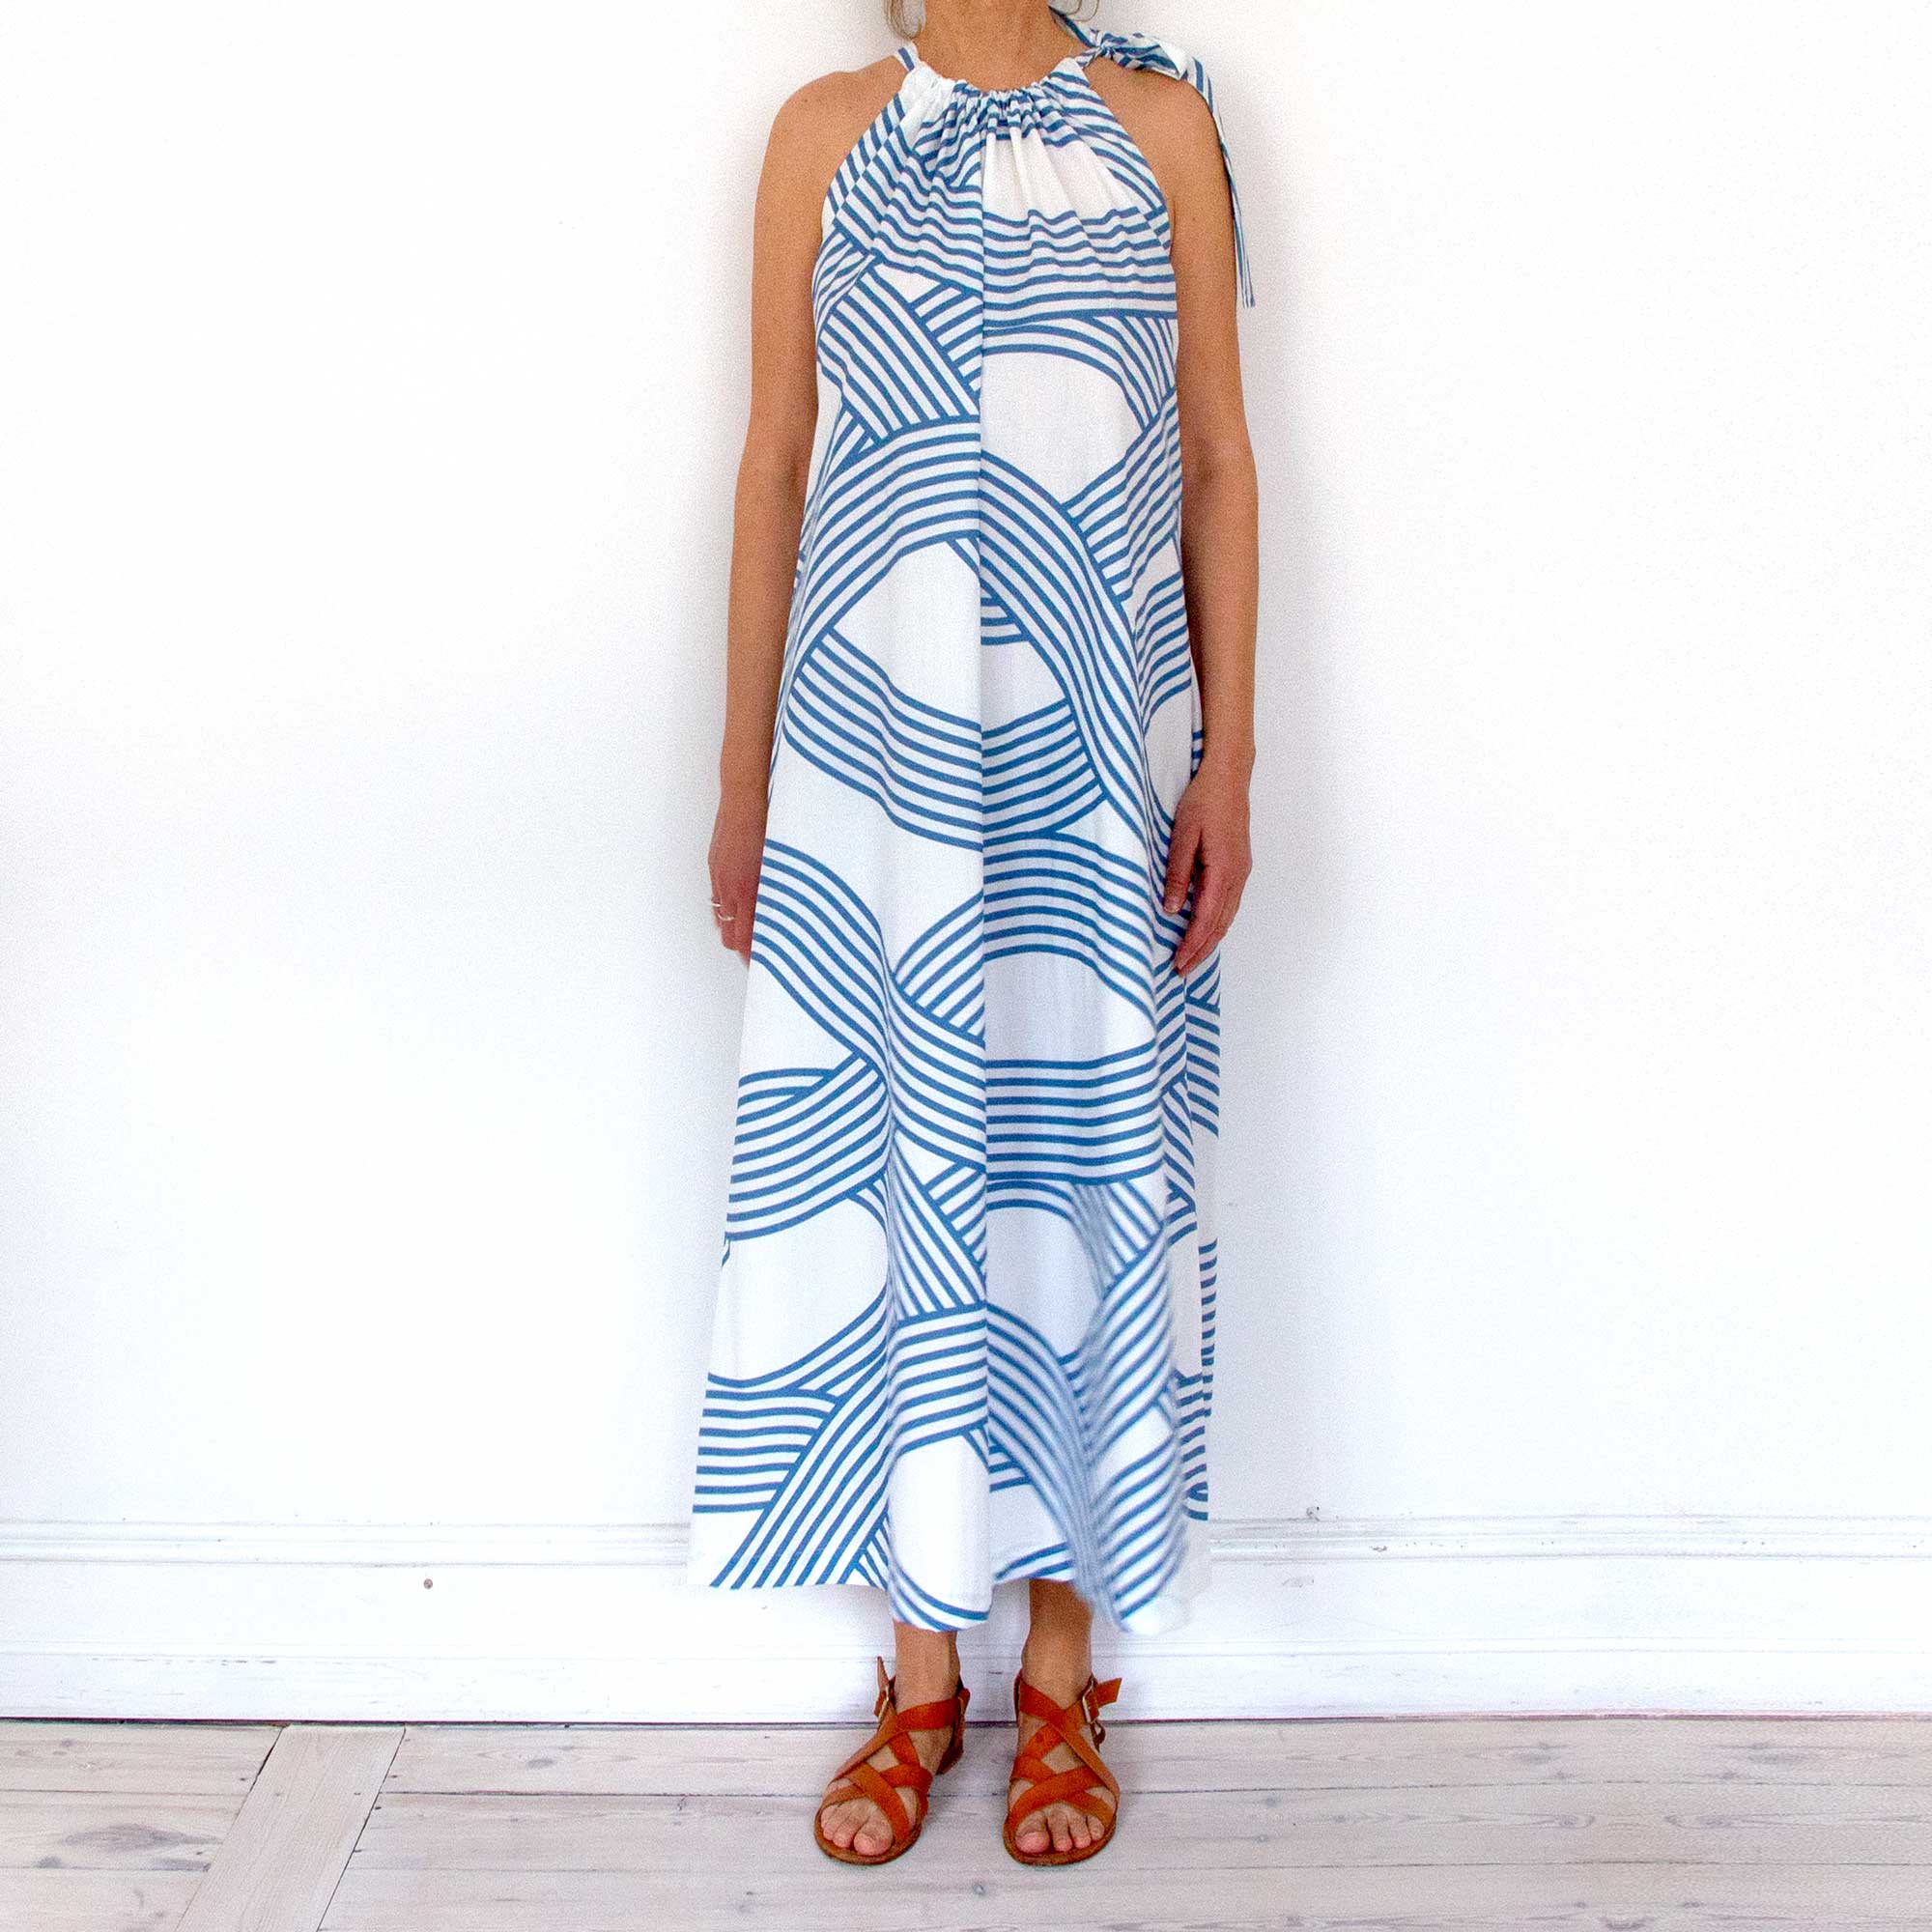 Leh dress, Ocean blue in organic cotton, printed in Germany sewn in Denmark. Design Anne Rosenberg